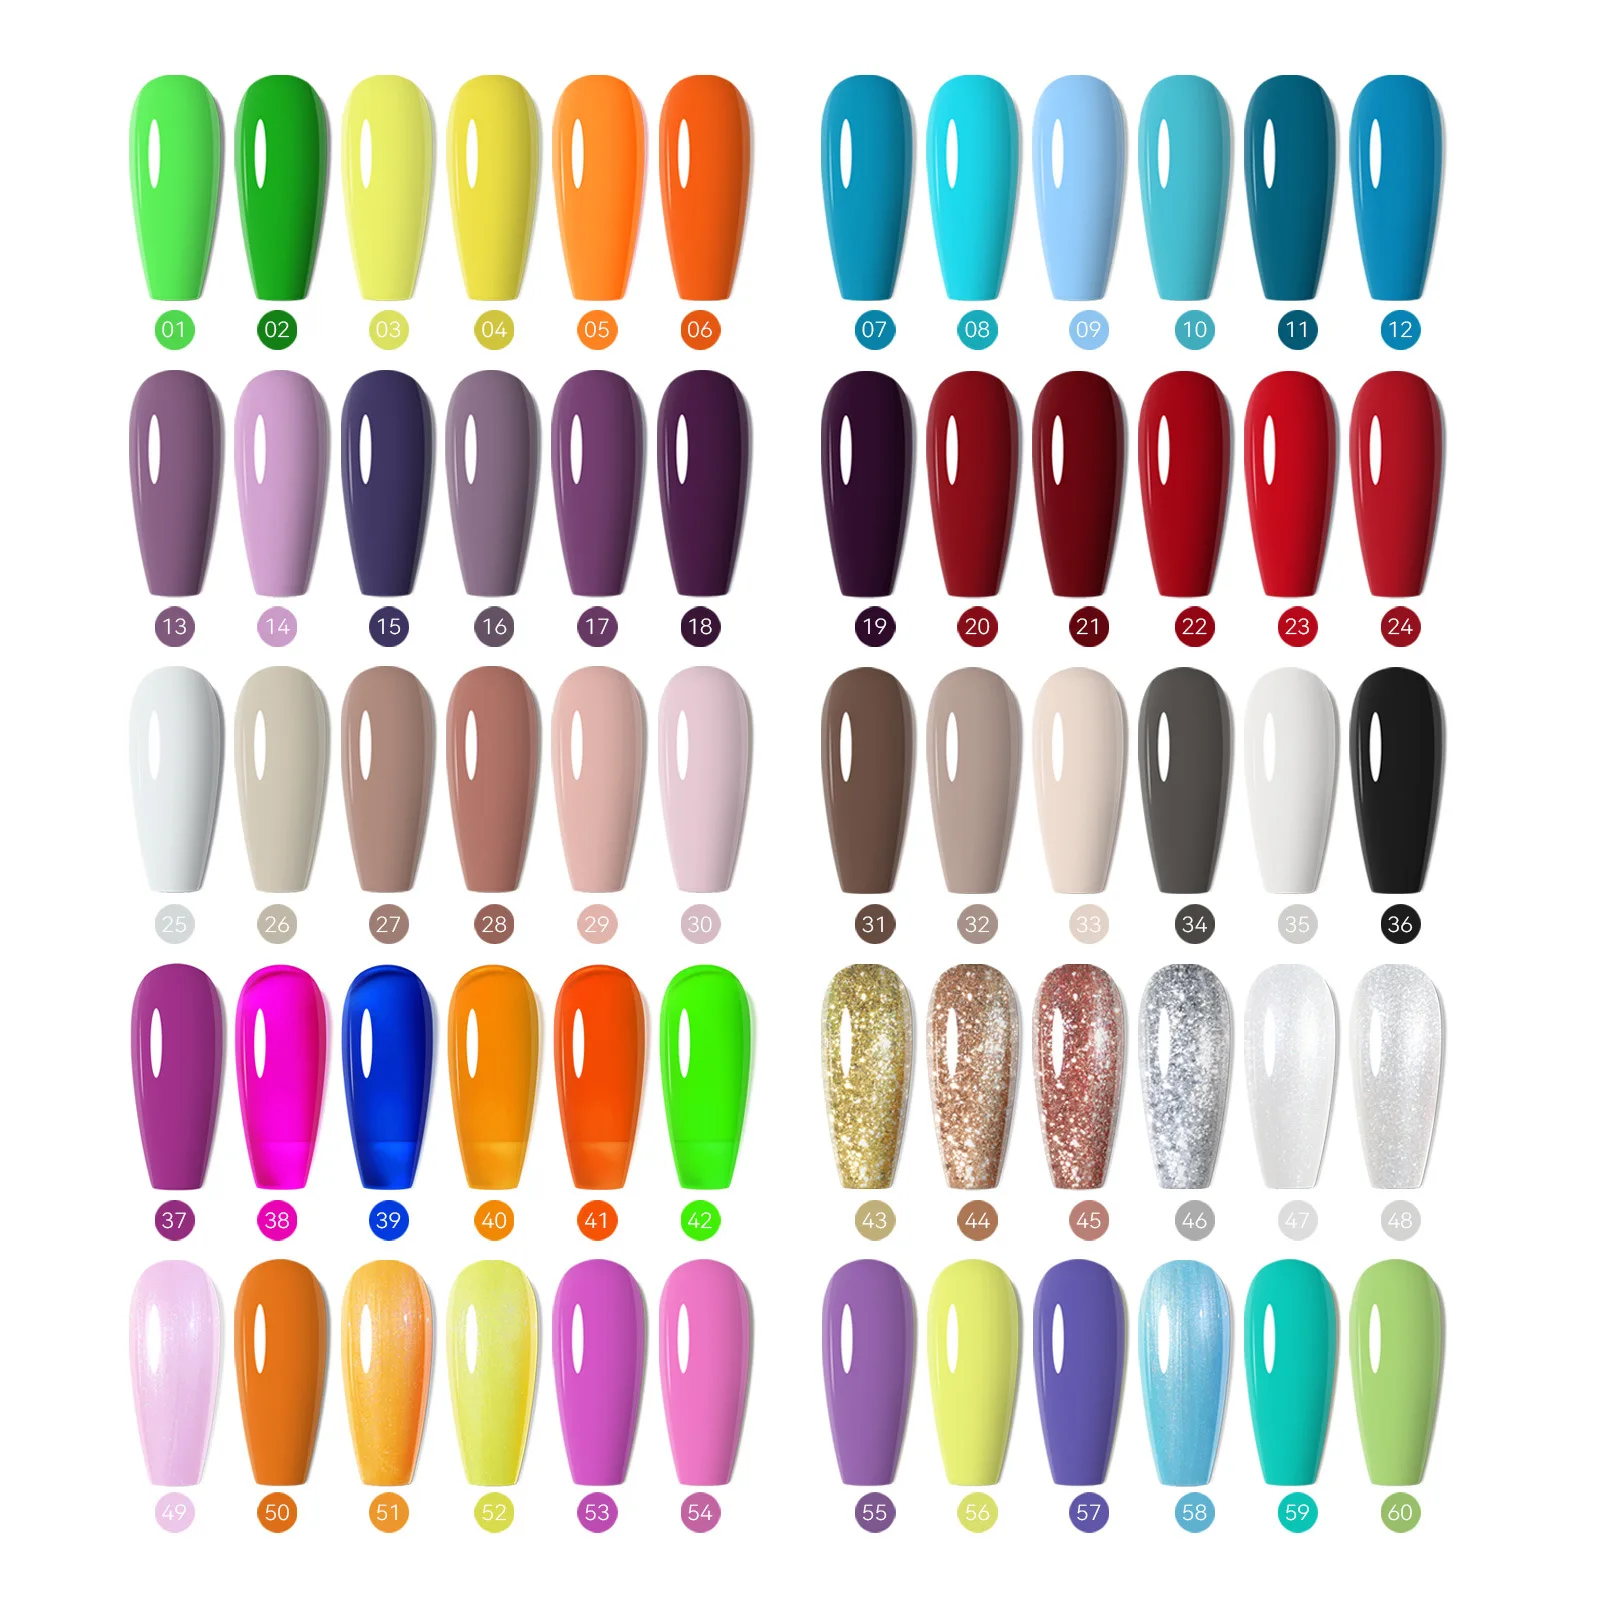 Newest 10 Series 7ml 6 Colors Uv Gel Nail Polish Gift Kit Soak Off Uv ...